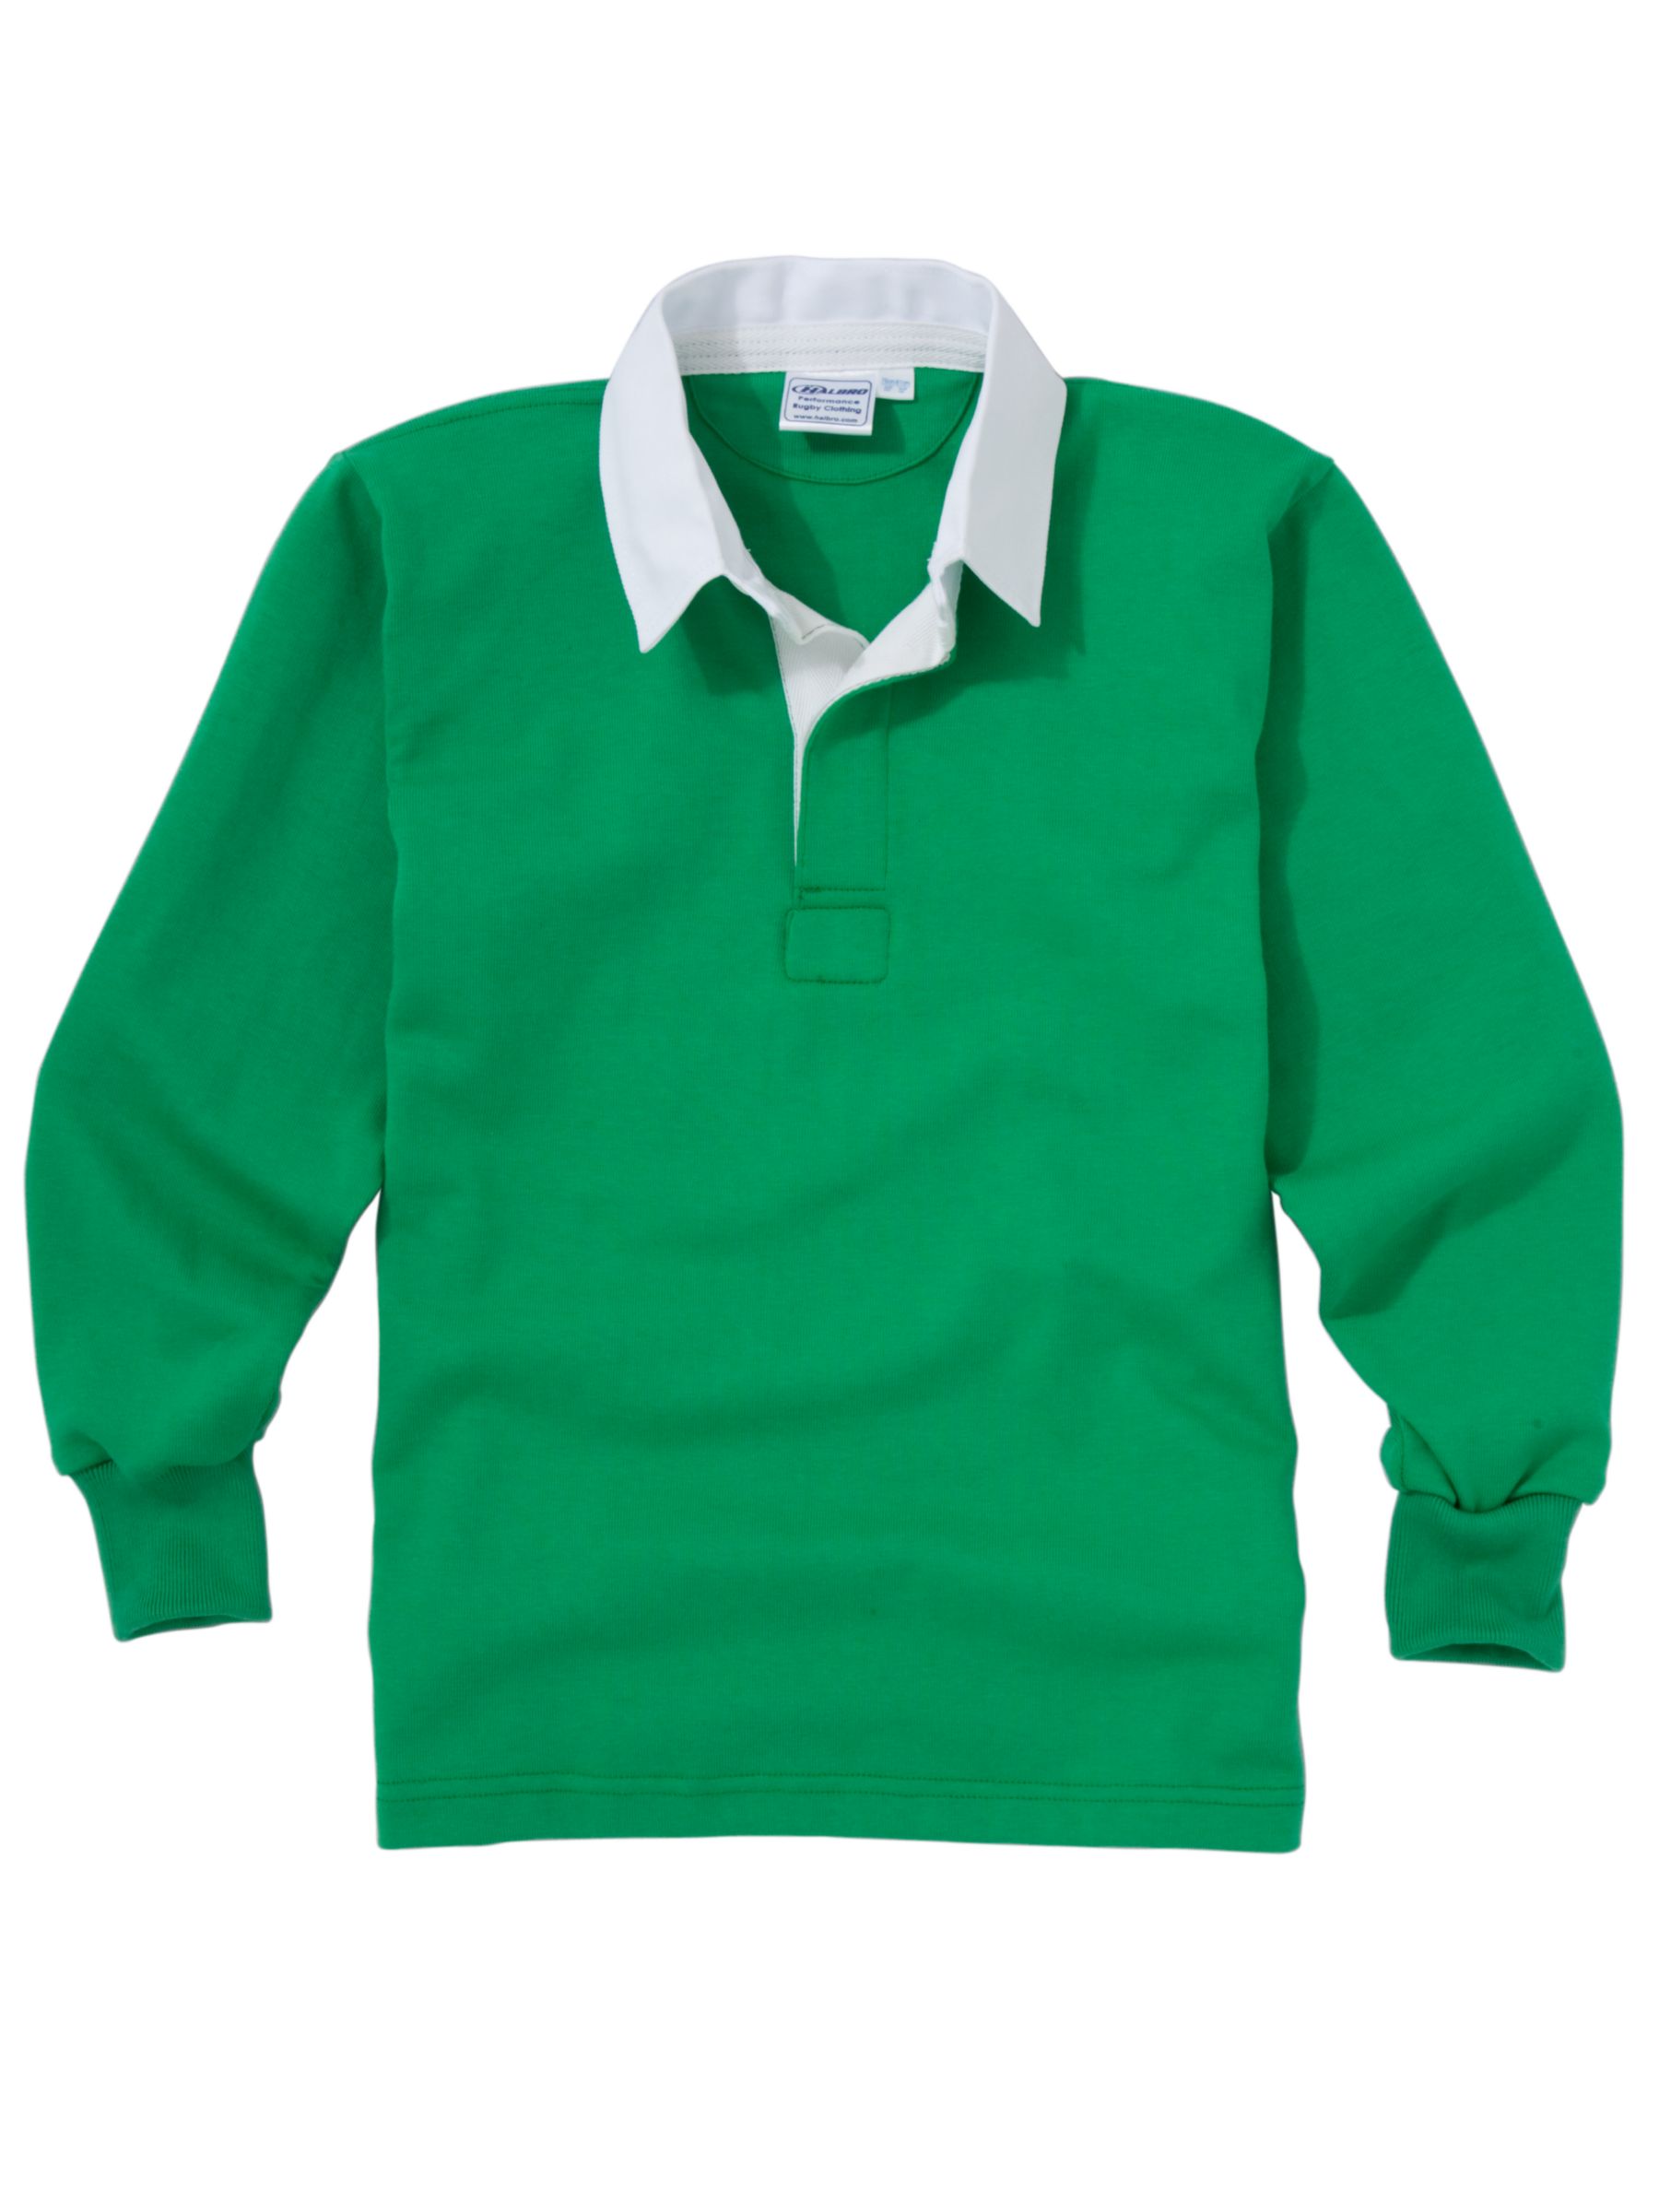 John Lewis School Cotton Rugby Shirt, Emerald Green